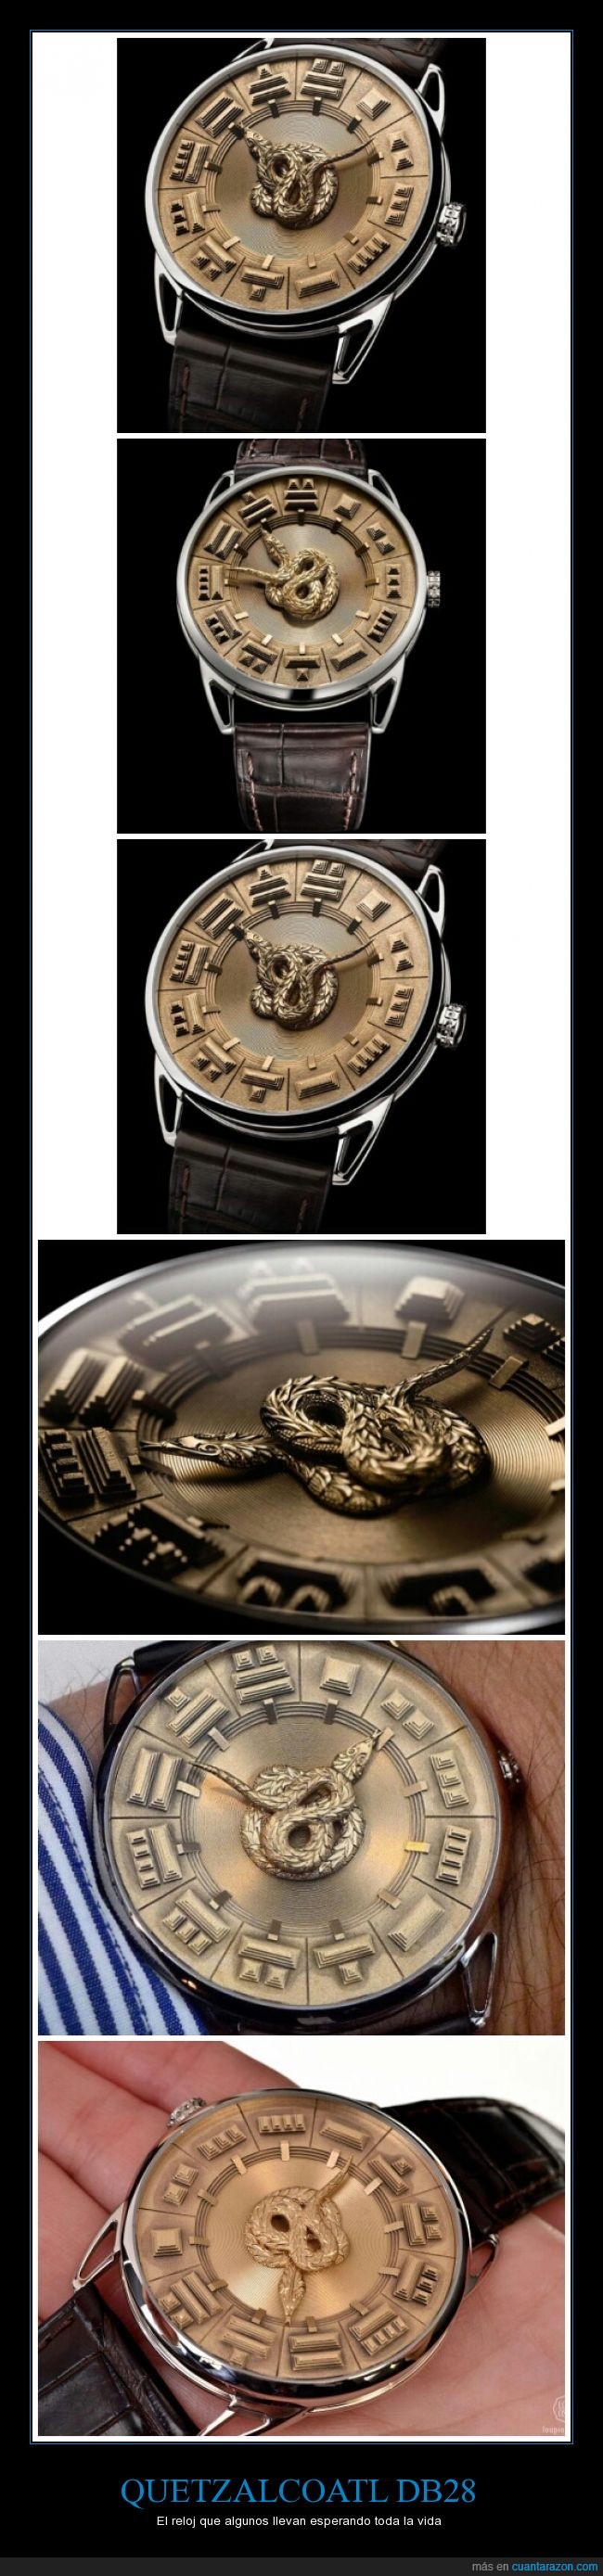 François- Xavier Overstake,Carson Chan,DB28 Quetzalcoatl,oro,reloj